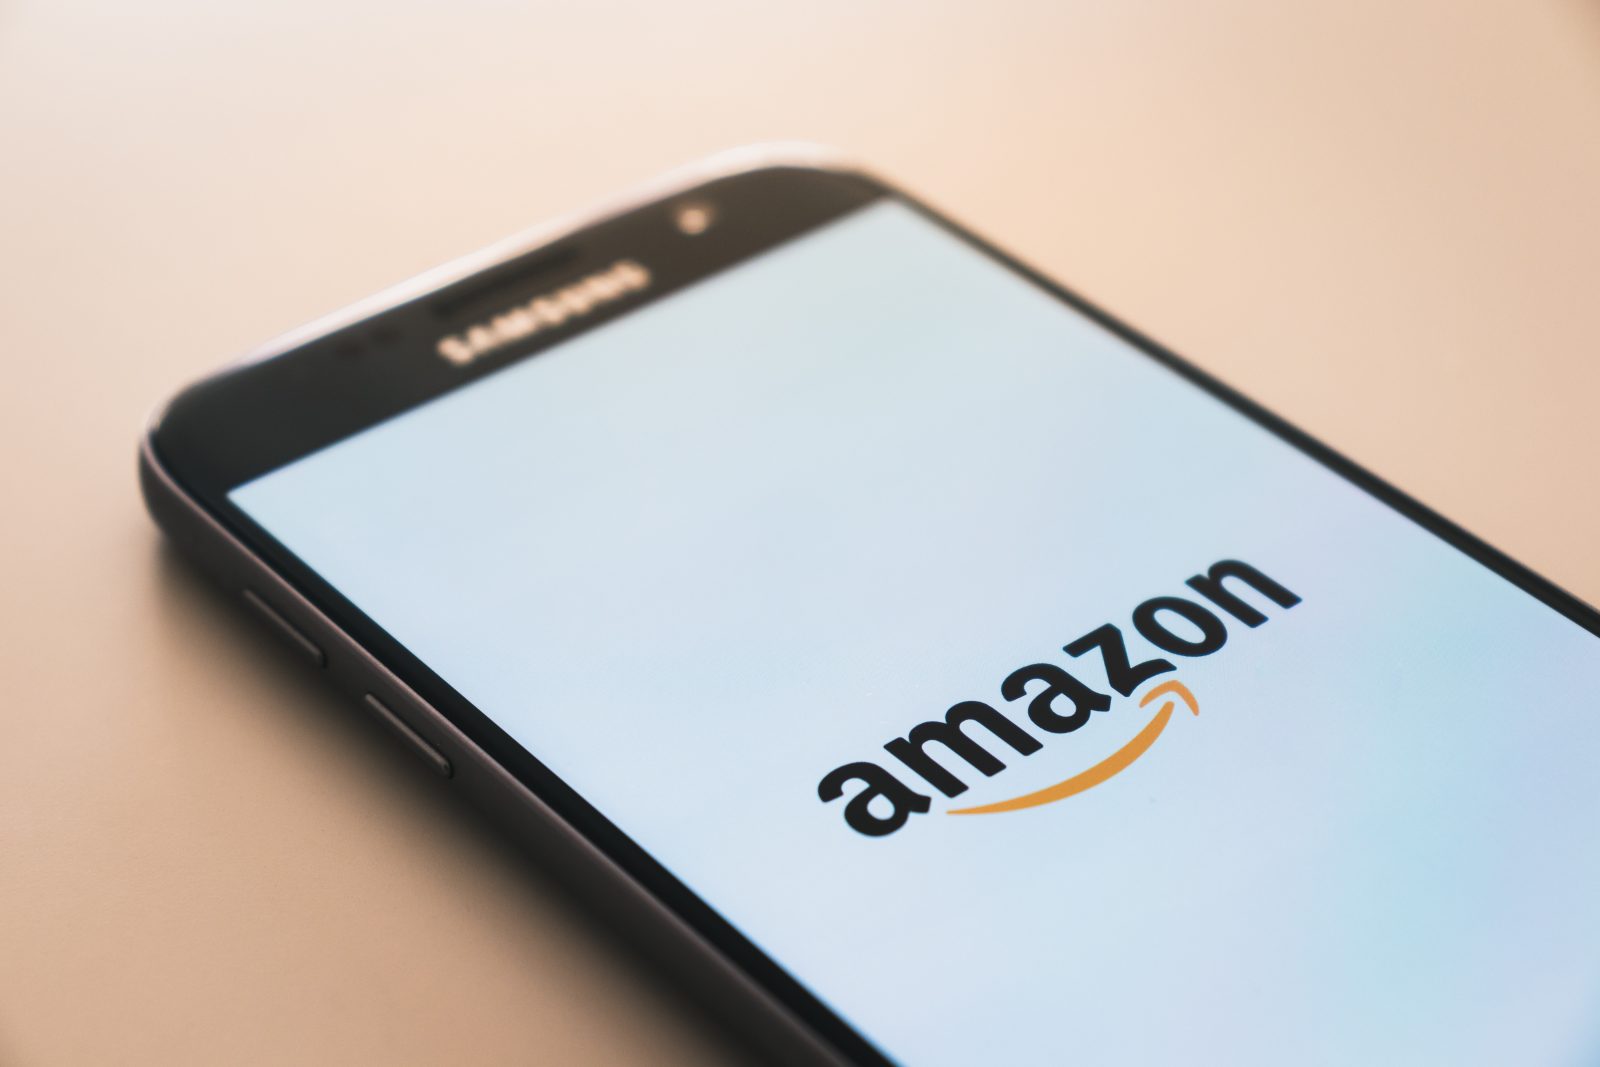 Amazon.com Prioritizes Corporate Profits Over Civil Liberties In Facial Recognition Fight